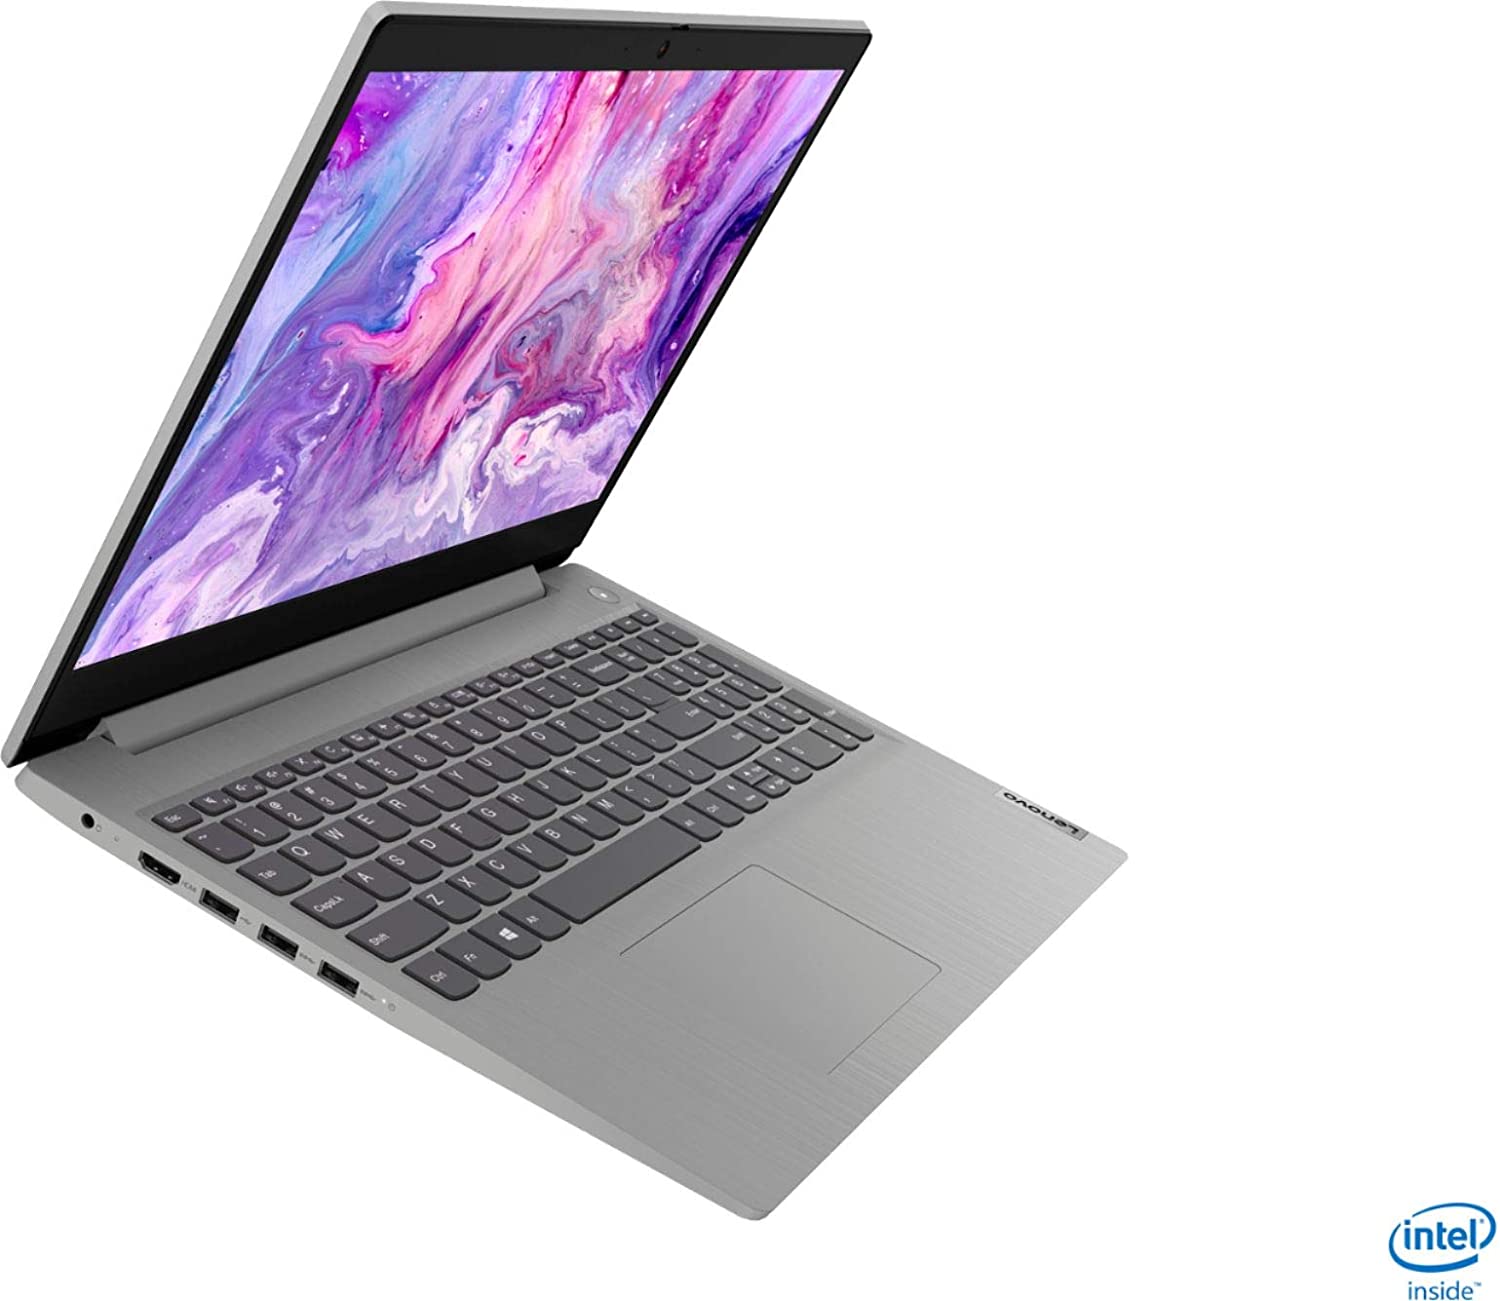 Lenovo - IdeaPad 3 15" Laptop - Intel Core i3-1005G1 - 8GB Memory - 256GB SSD - Platinum Grey - 81WE011UUS - image 4 of 6